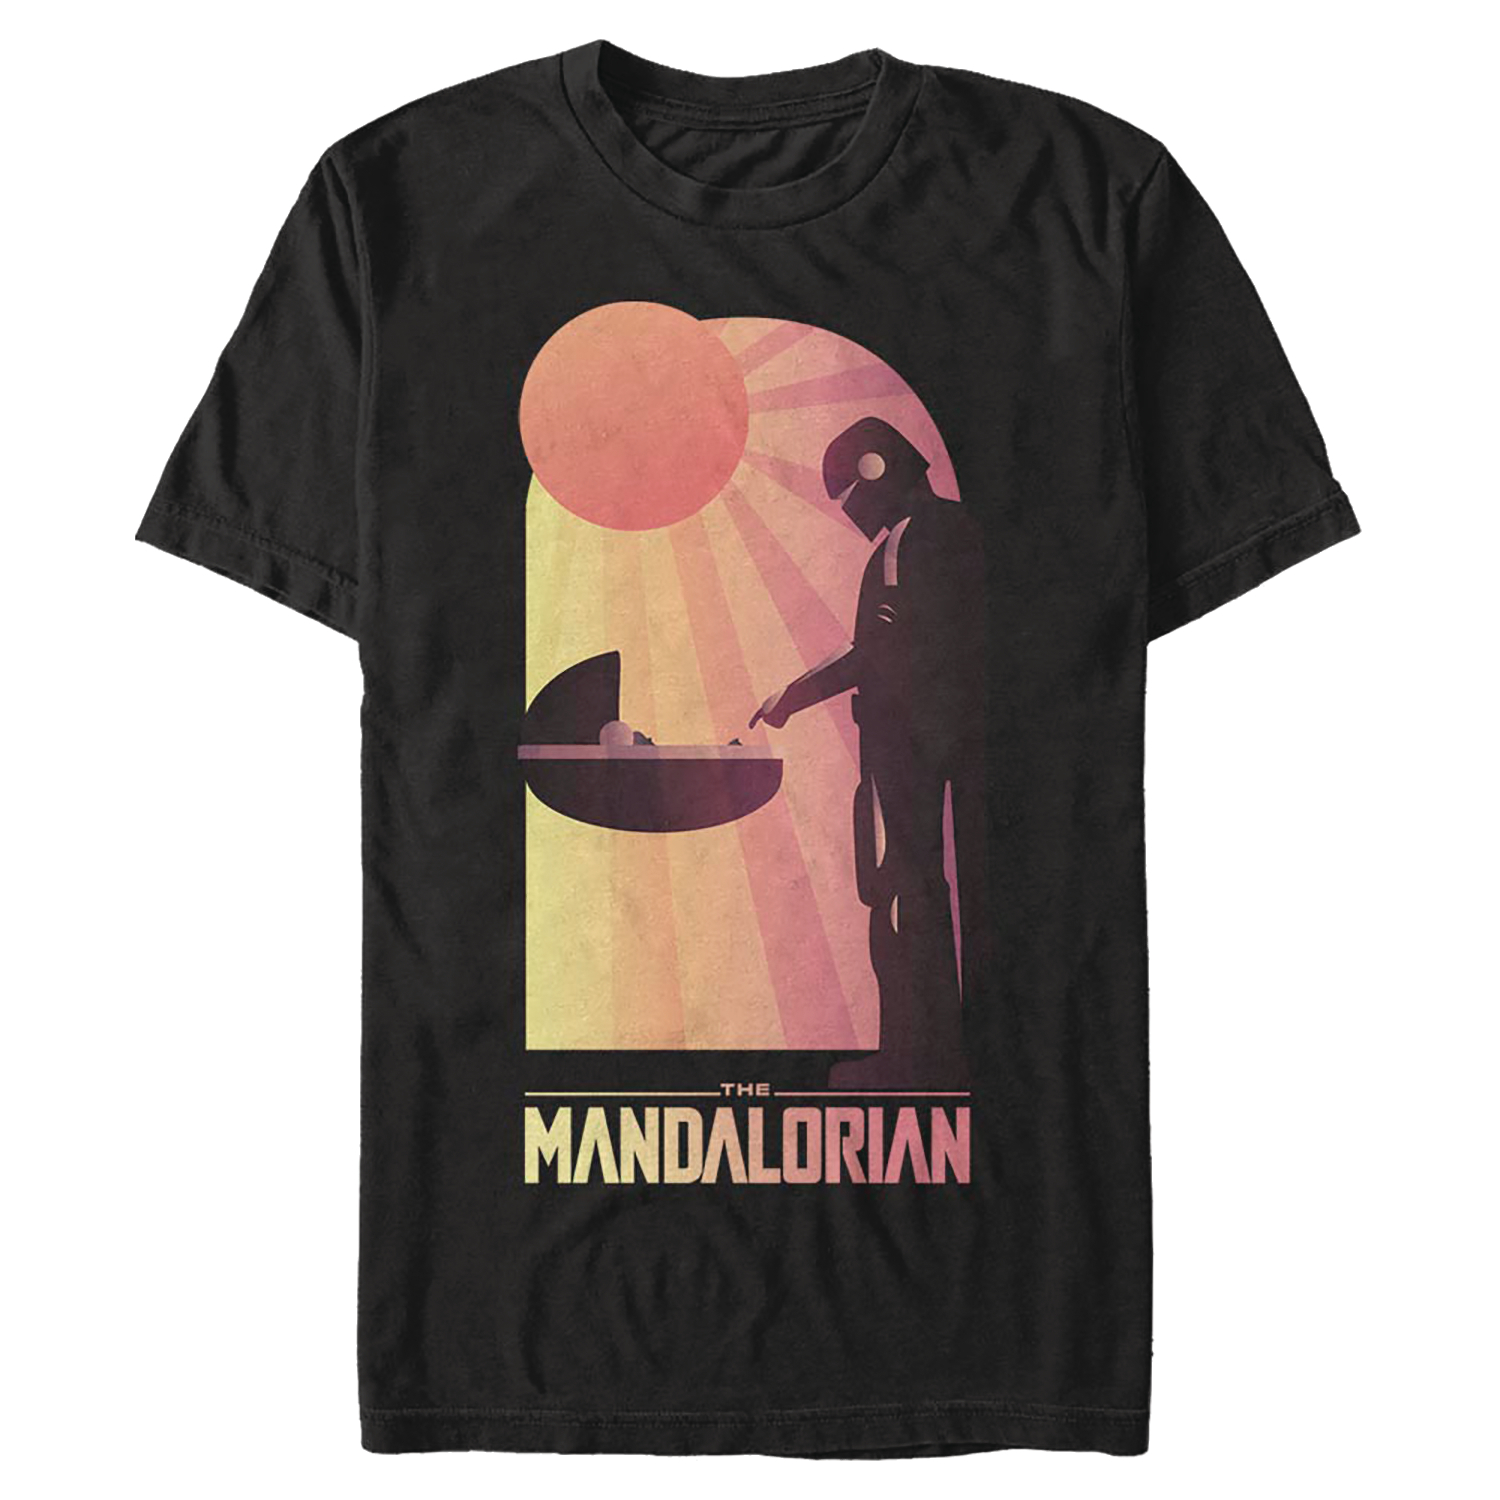 Star Wars The Mandalorian A Warm Meeting T-Shirt Large